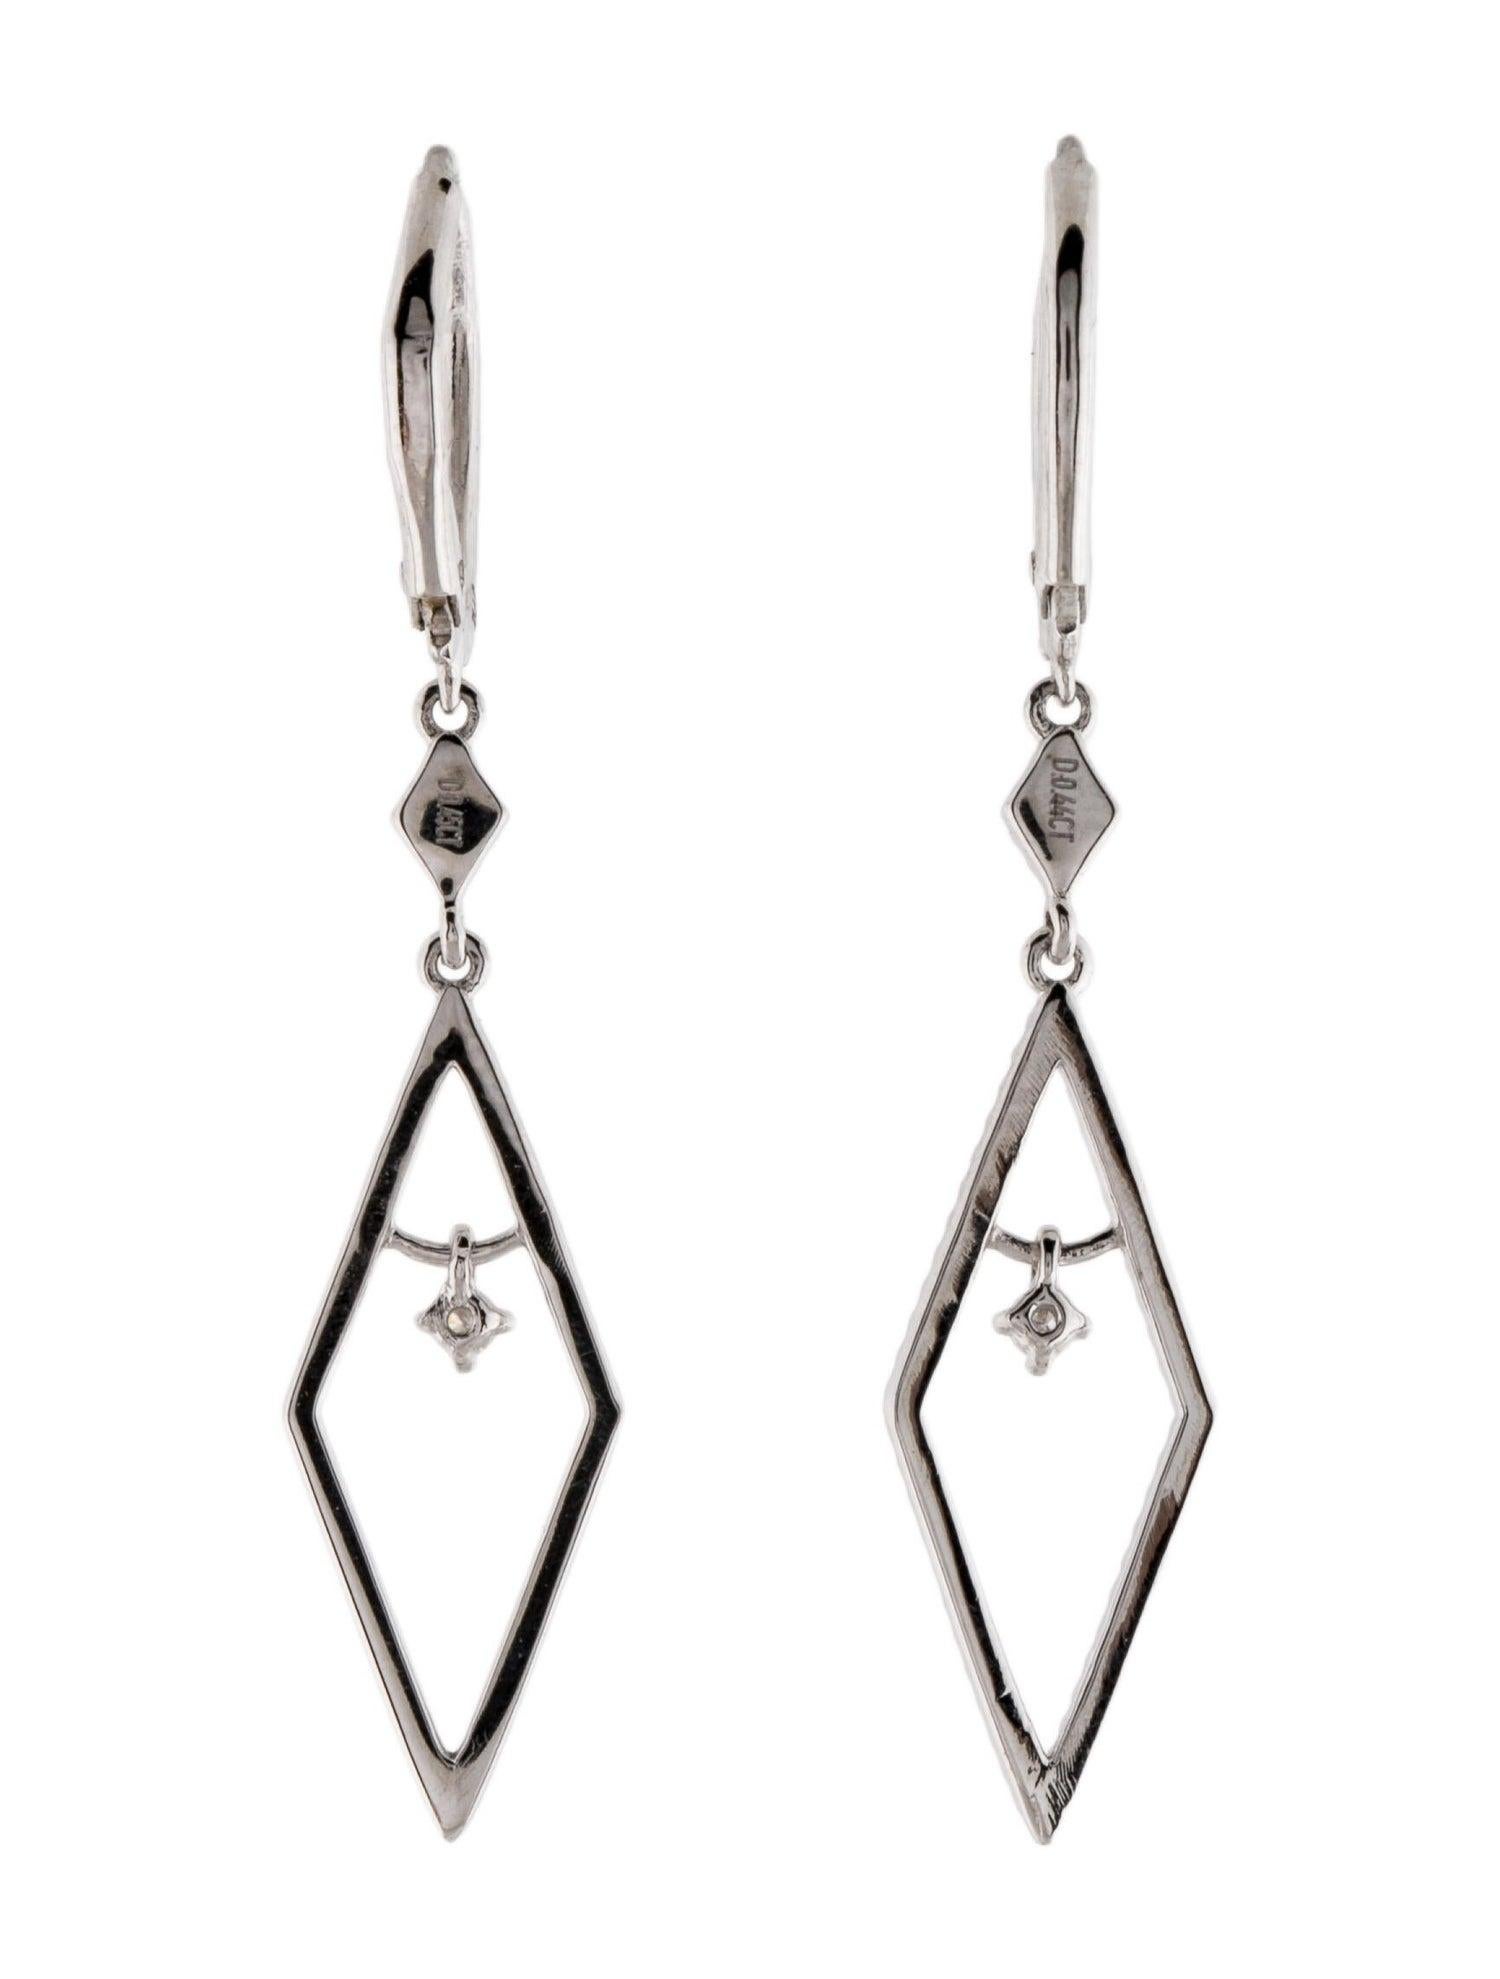 Brilliant Cut 14K Diamond Drop Earrings - Luxe Sparkle, Elegant Design, Timeless Beauty For Sale